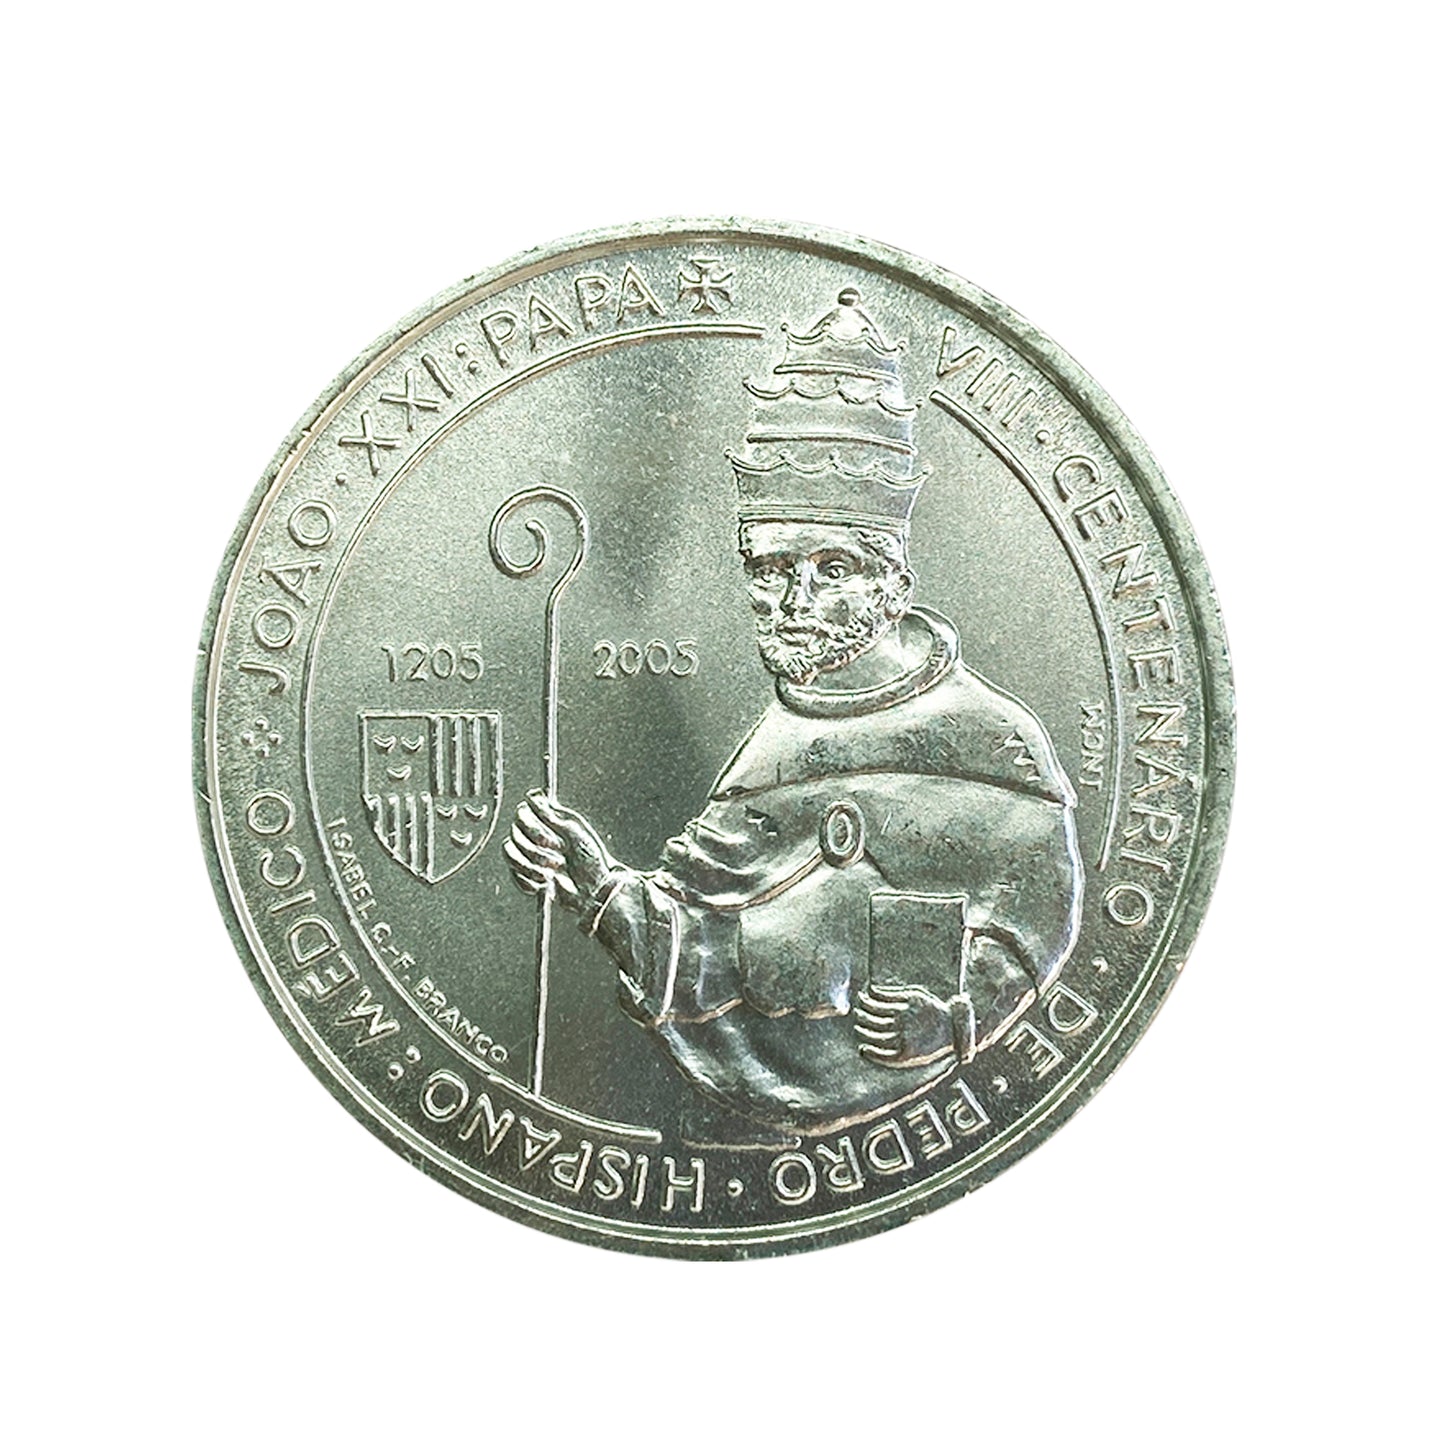 Portugal - Moneda 5 euros en plata 2005 - 800 Aniversario Papa Juan XXI